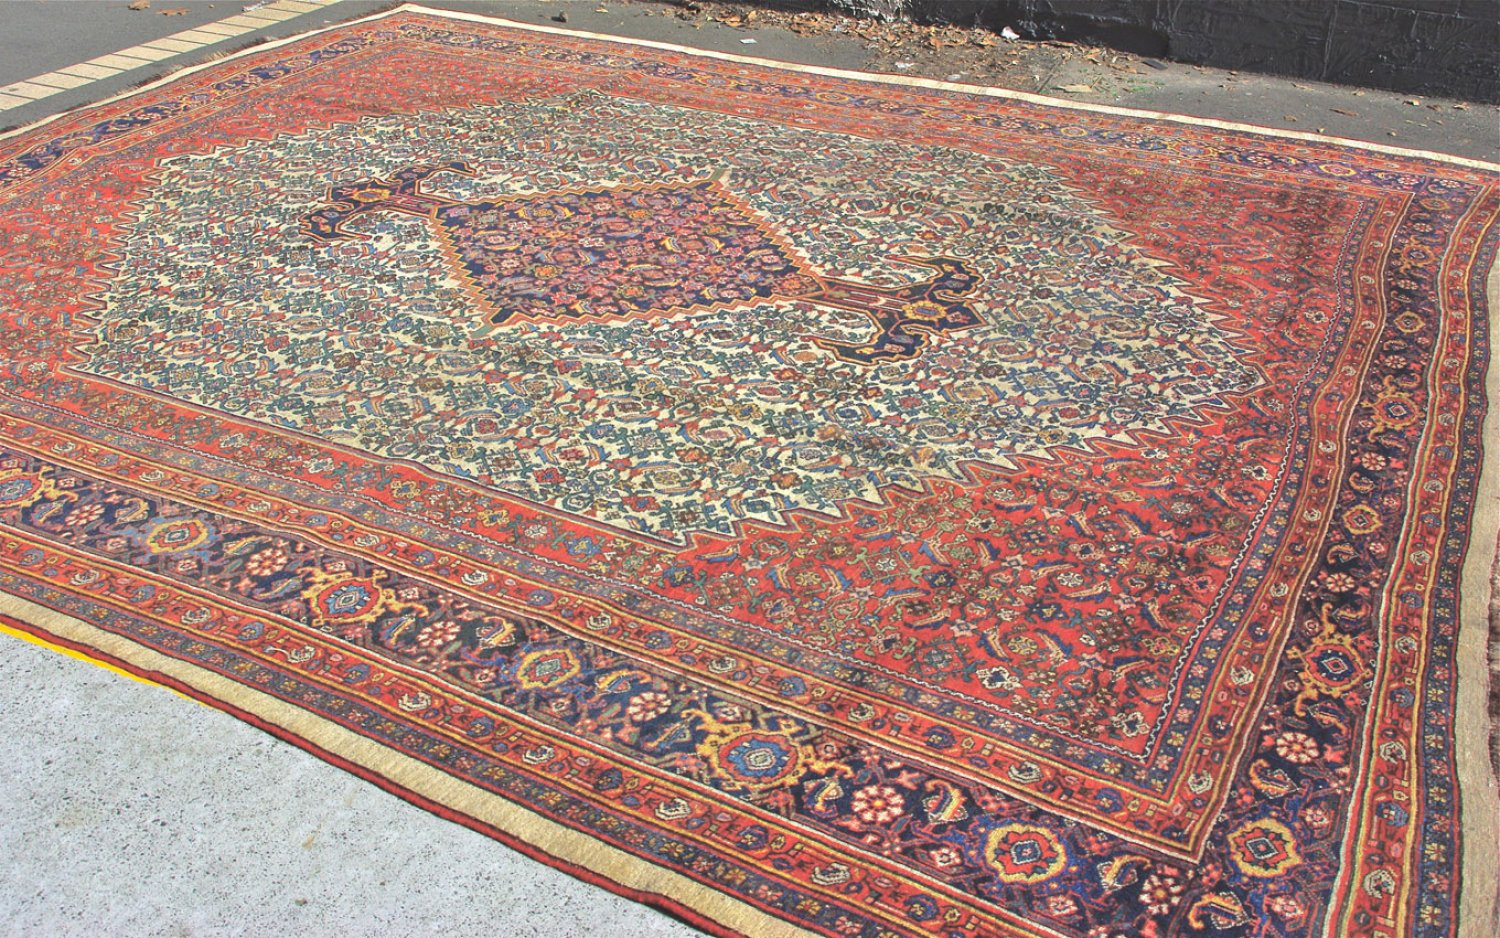 Bidjar carpet from western Persia